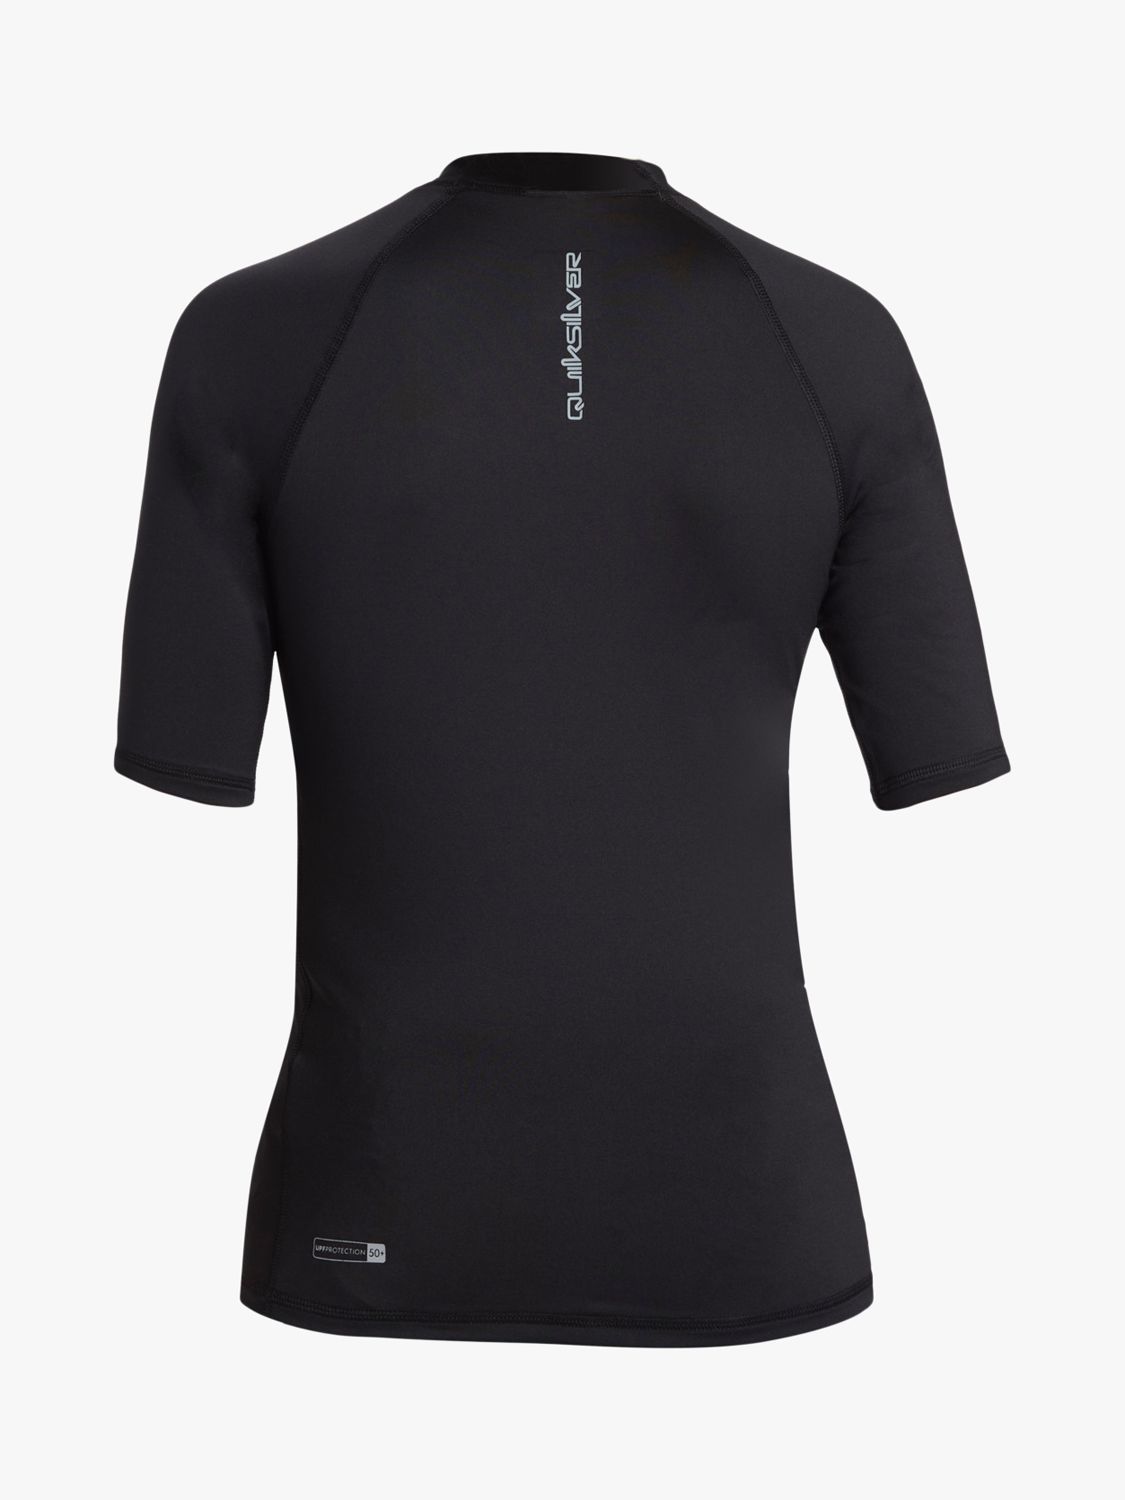 Buy Quicksilver Kids' Everyday Collection UPF 50 Short Sleeve Surf T-Shirt, Black Online at johnlewis.com